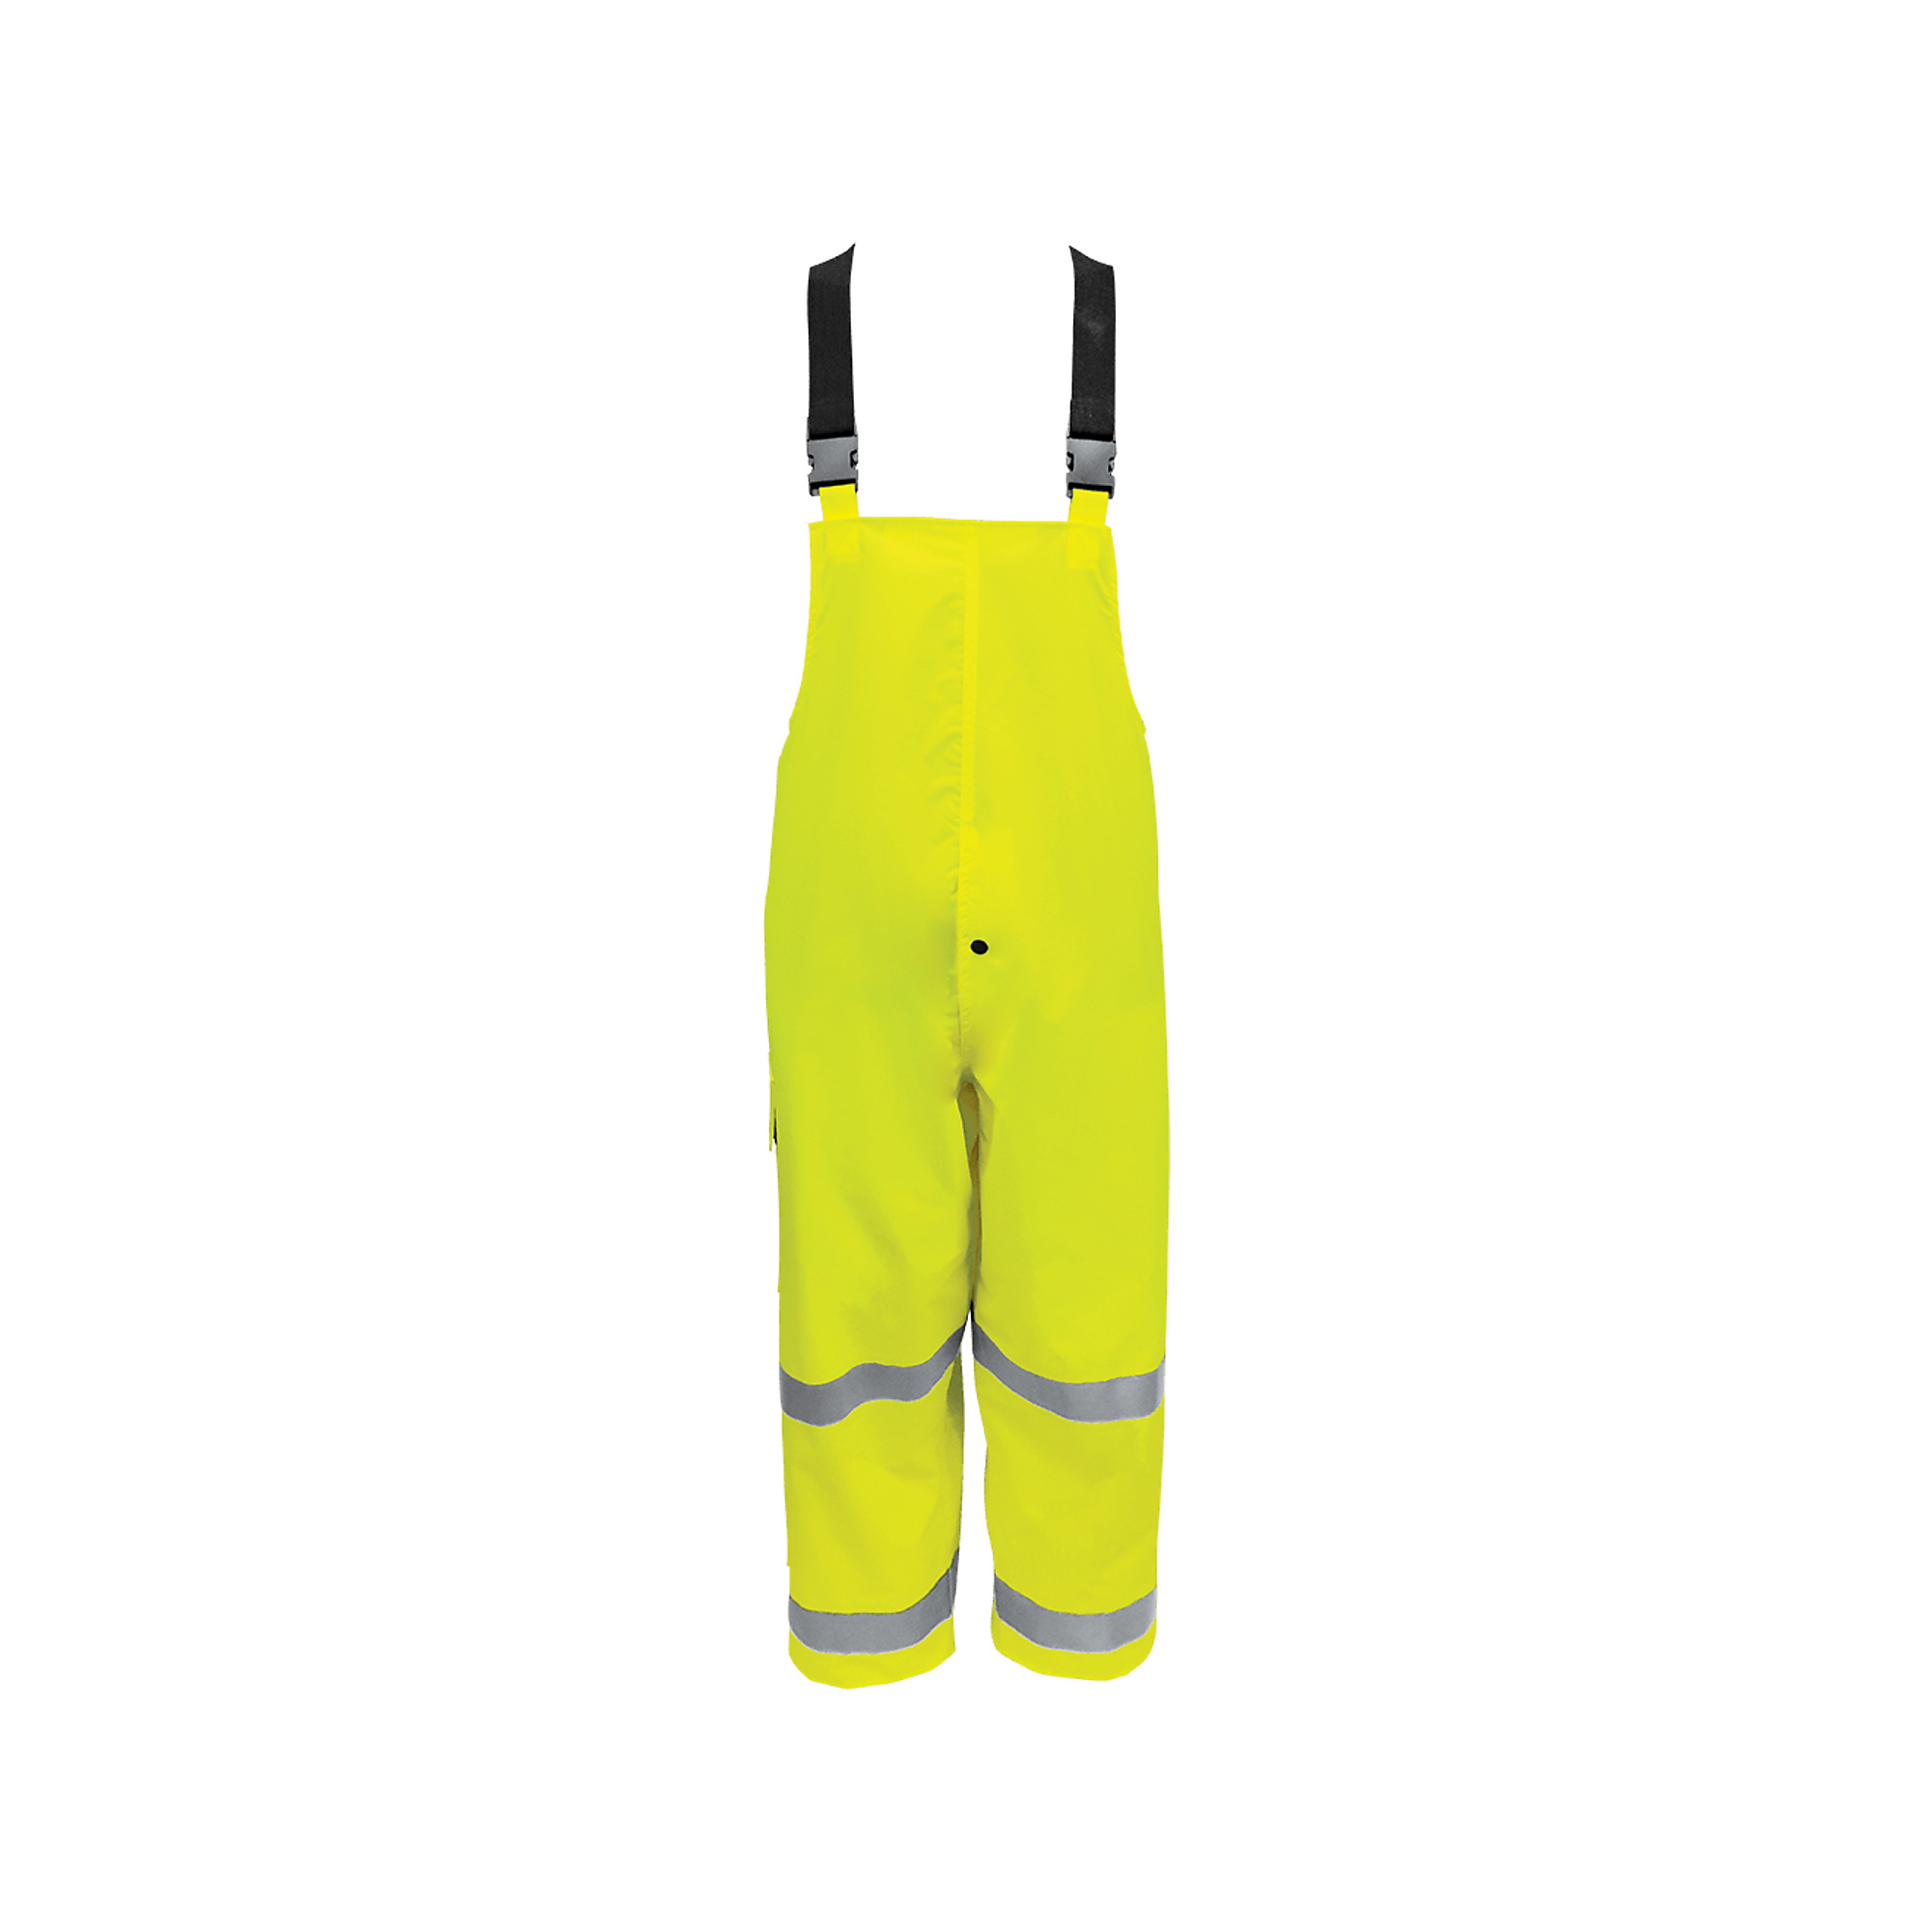 FrogWear, HV Yellow/Green, Self-Extinguishing, Class E, Rain Bibs, Size XL, Color High-Visibility Yellow/Green, Model GLO-1700-XL